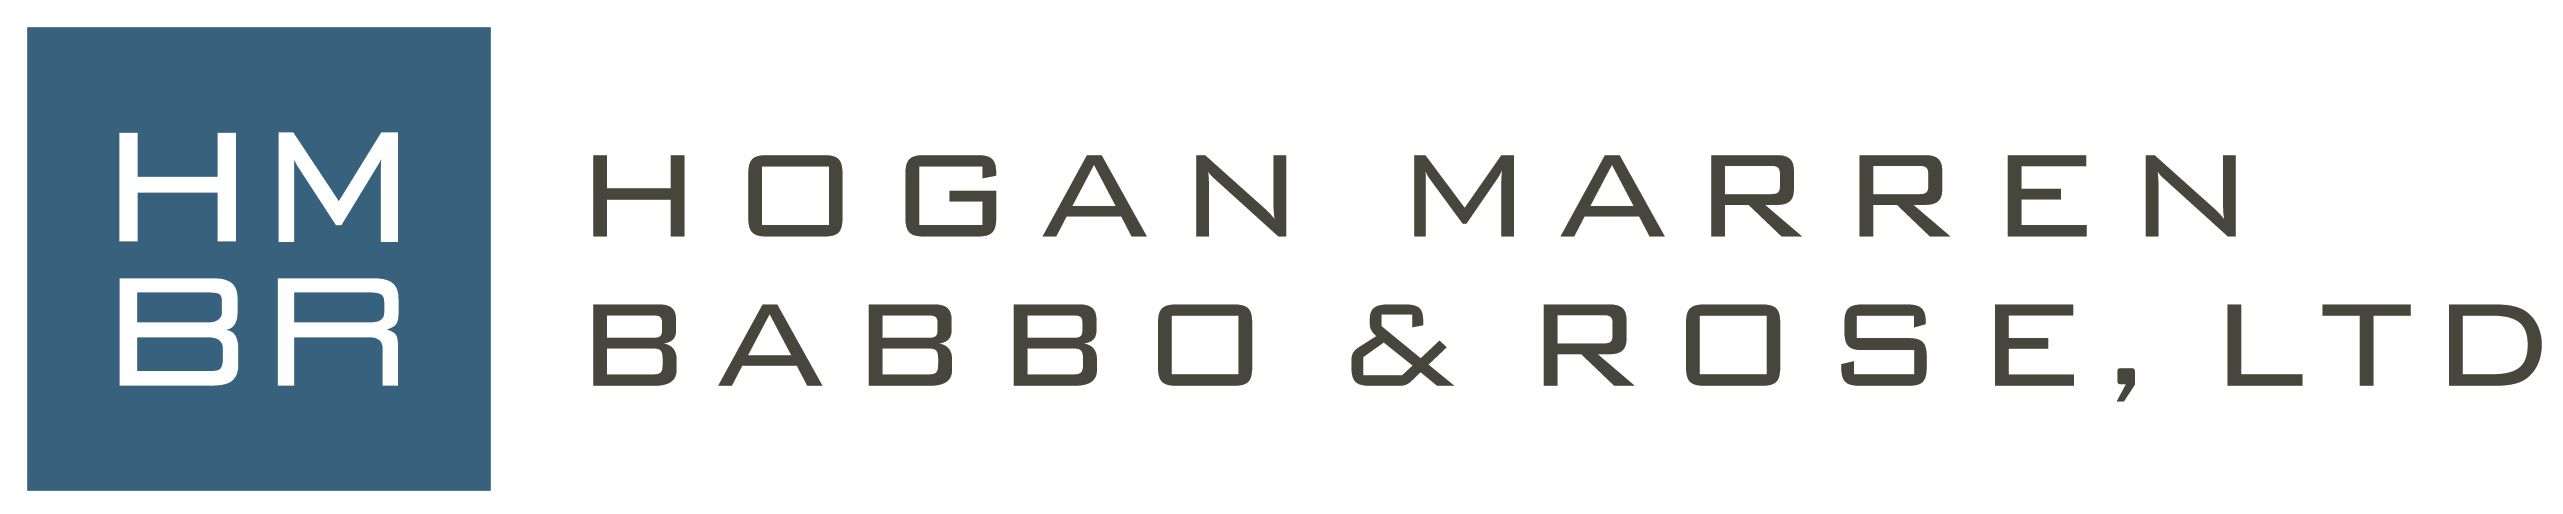 Hogan Marren Babbo & Rose, Ltd. law firm logo